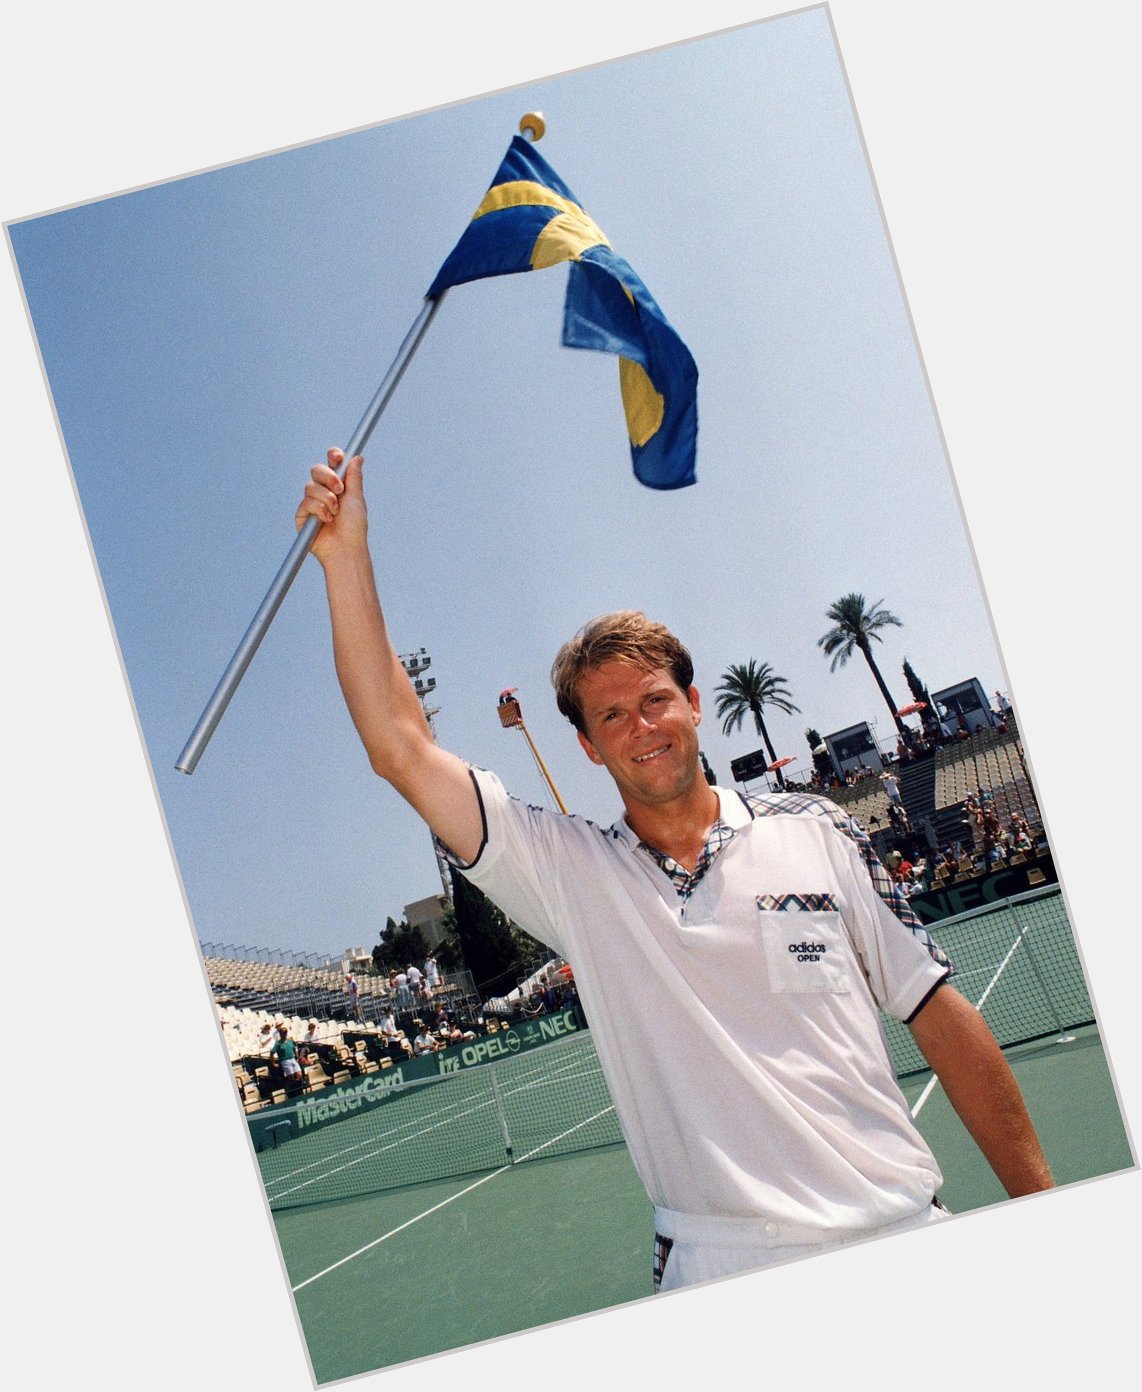 Happy birthday to our 4-time champion, Stefan Edberg    